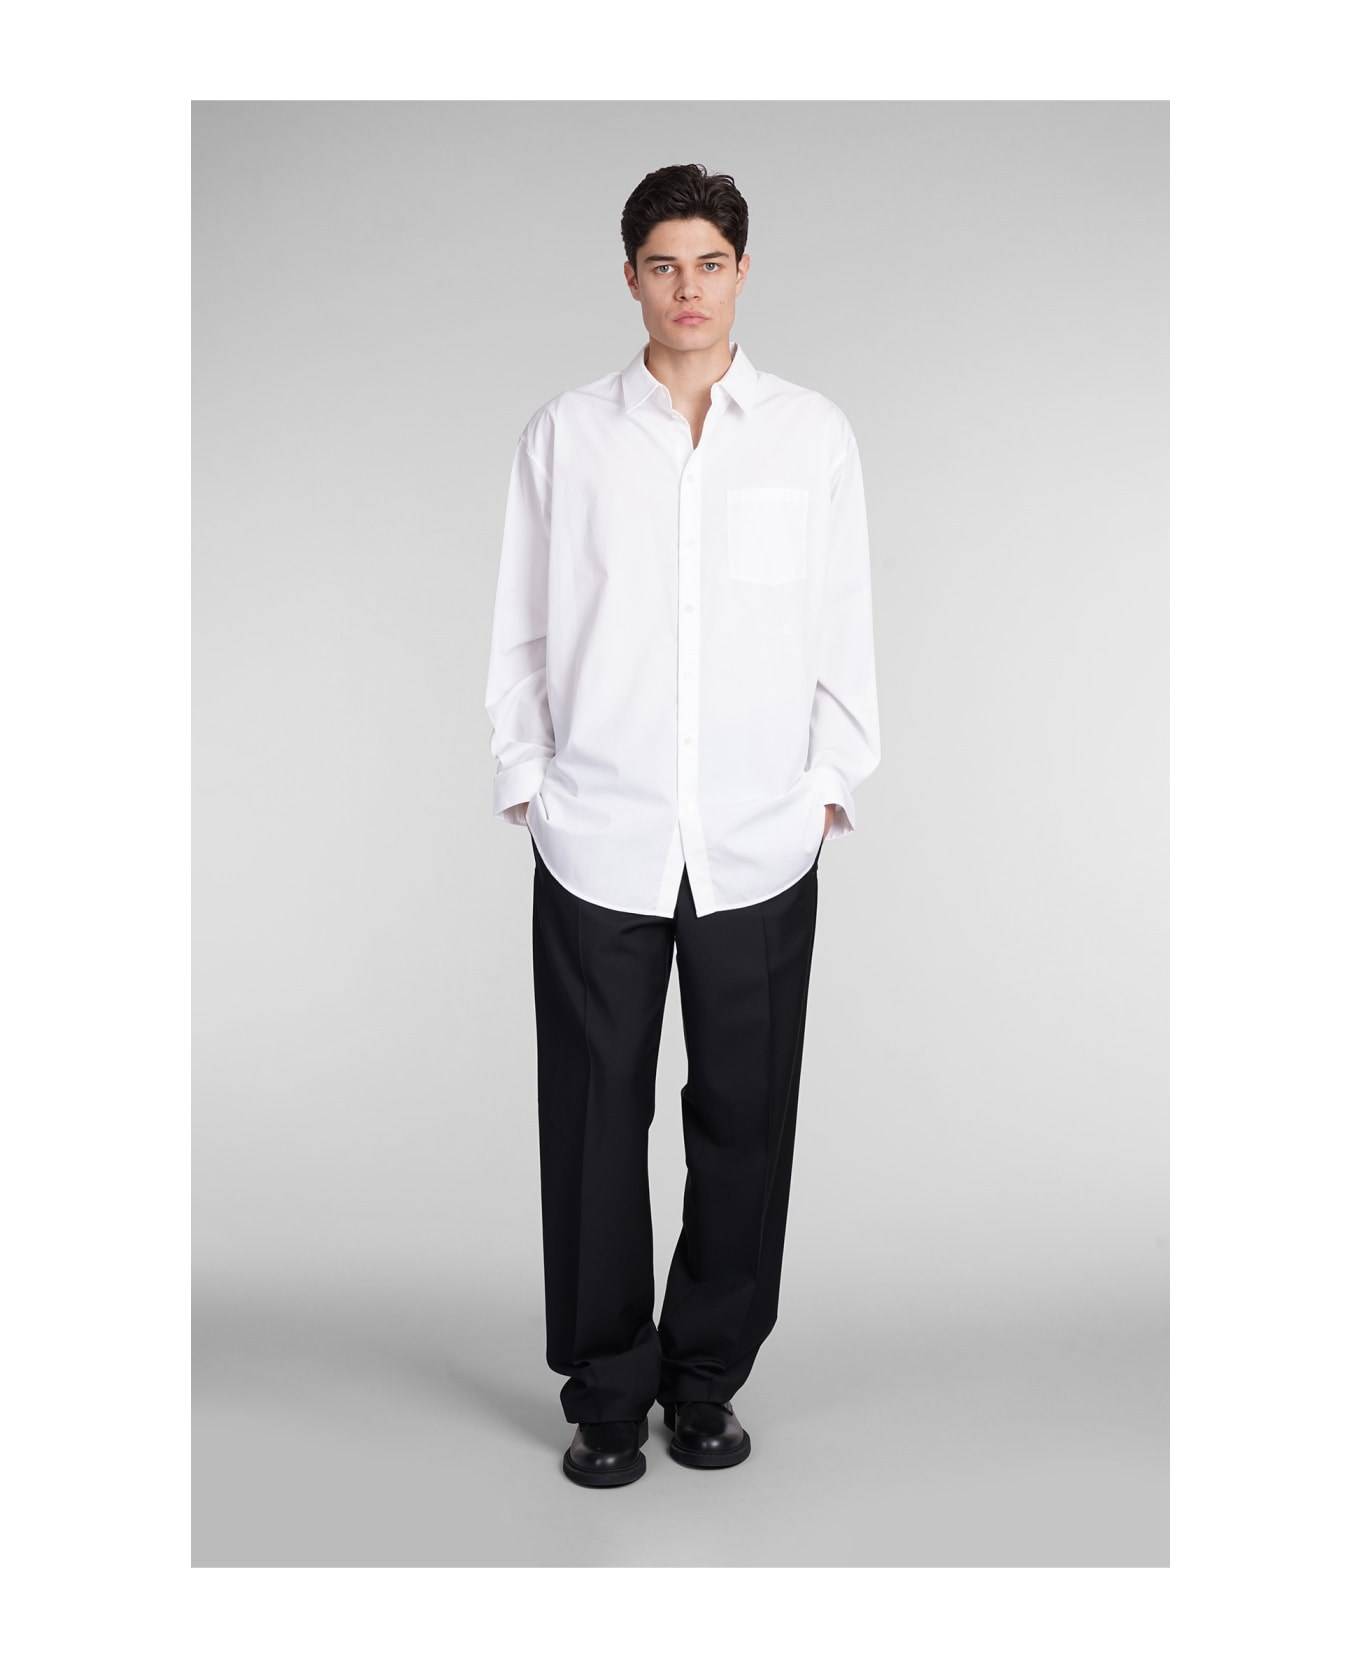 Helmut Lang Shirt In White Cotton - white シャツ